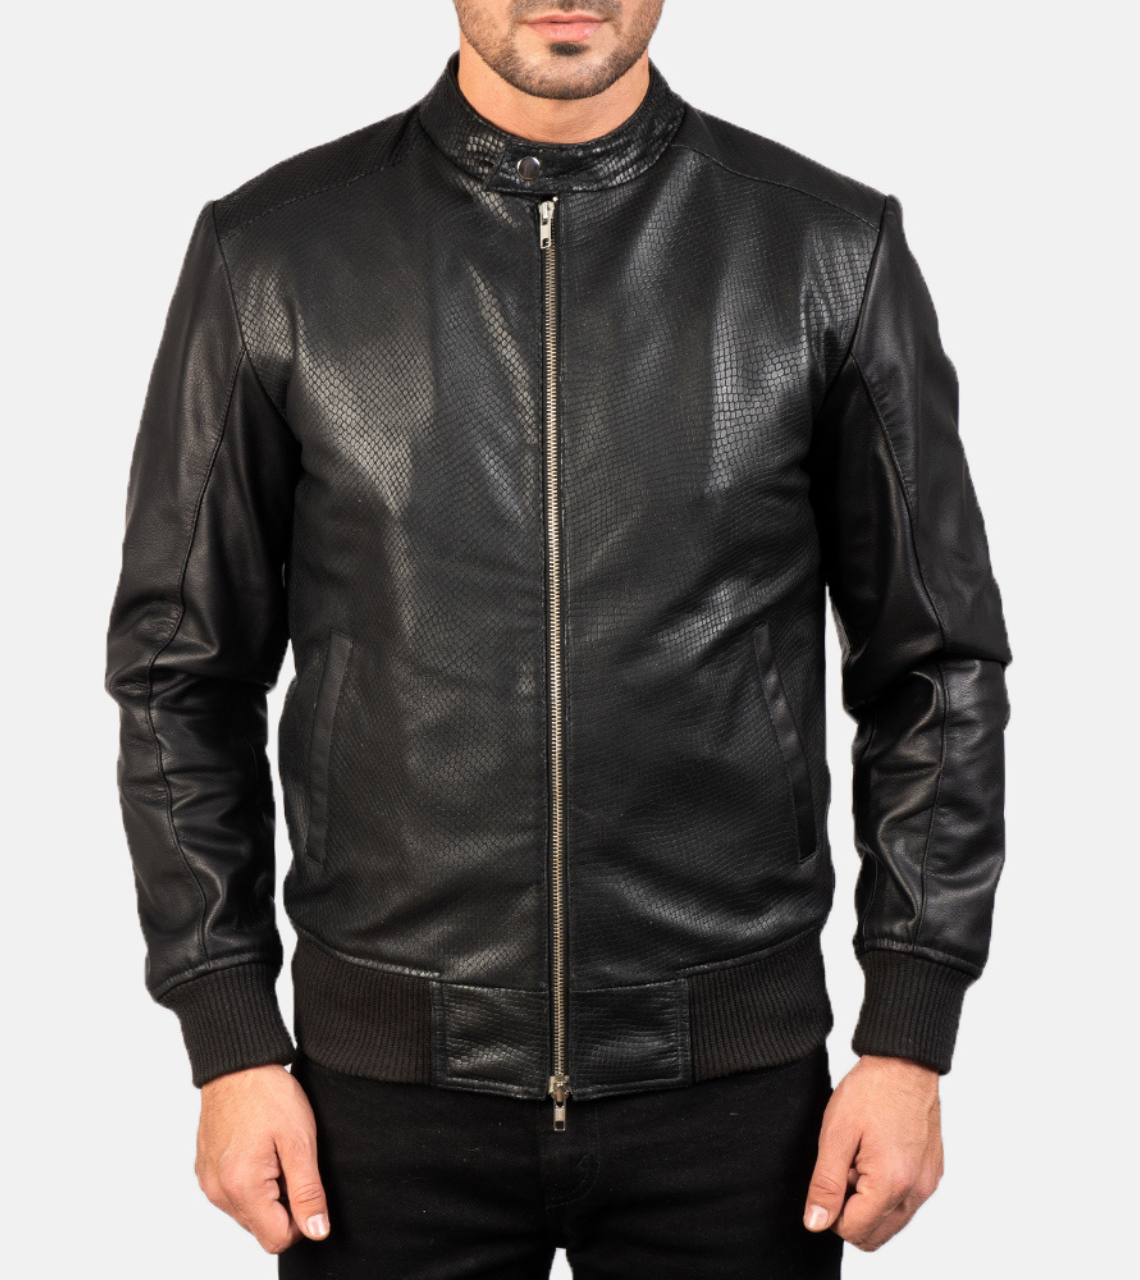 Rocher Percé Black Men's Leather Bomber Jacket